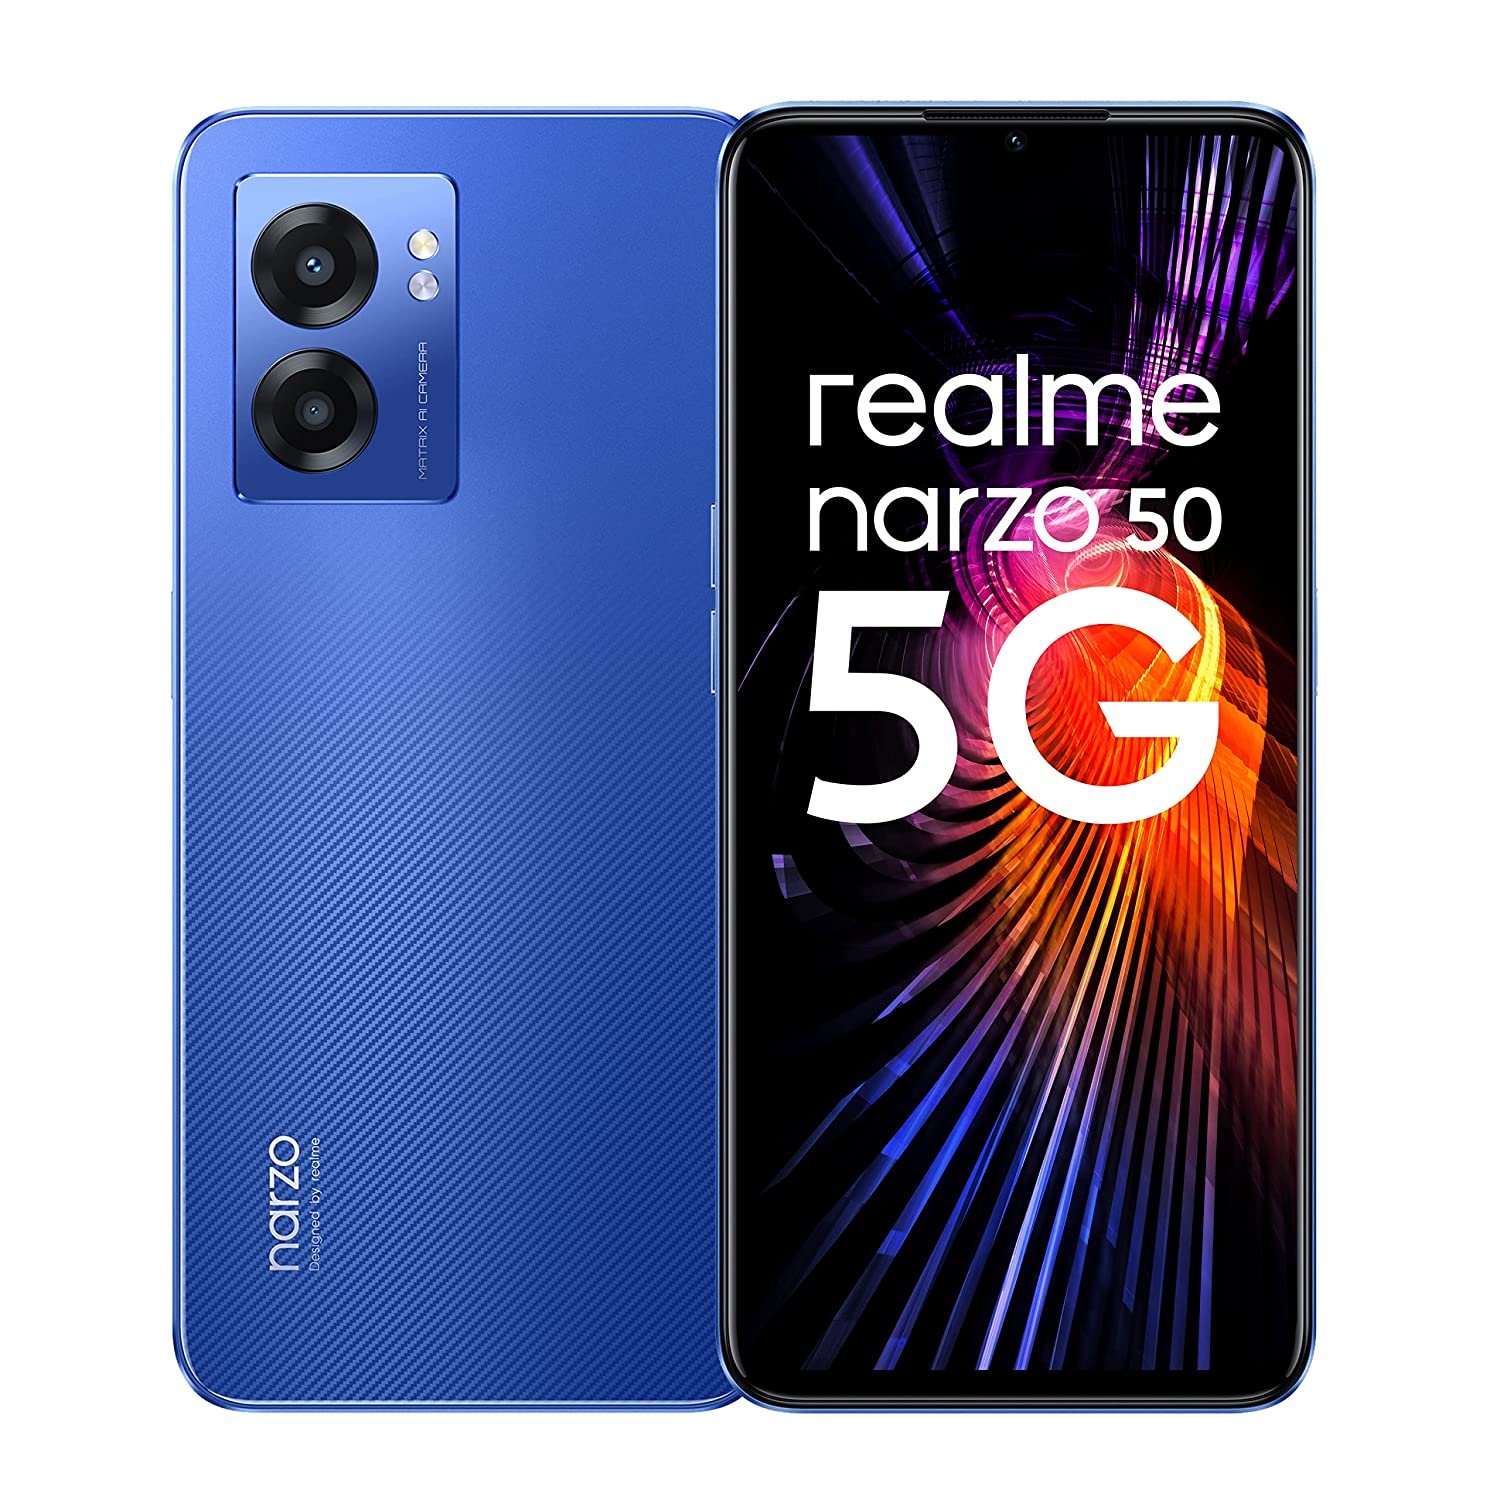 Realme narzo 50 5G (Hyper Blue, 4GB RAM+64GB Storage) 